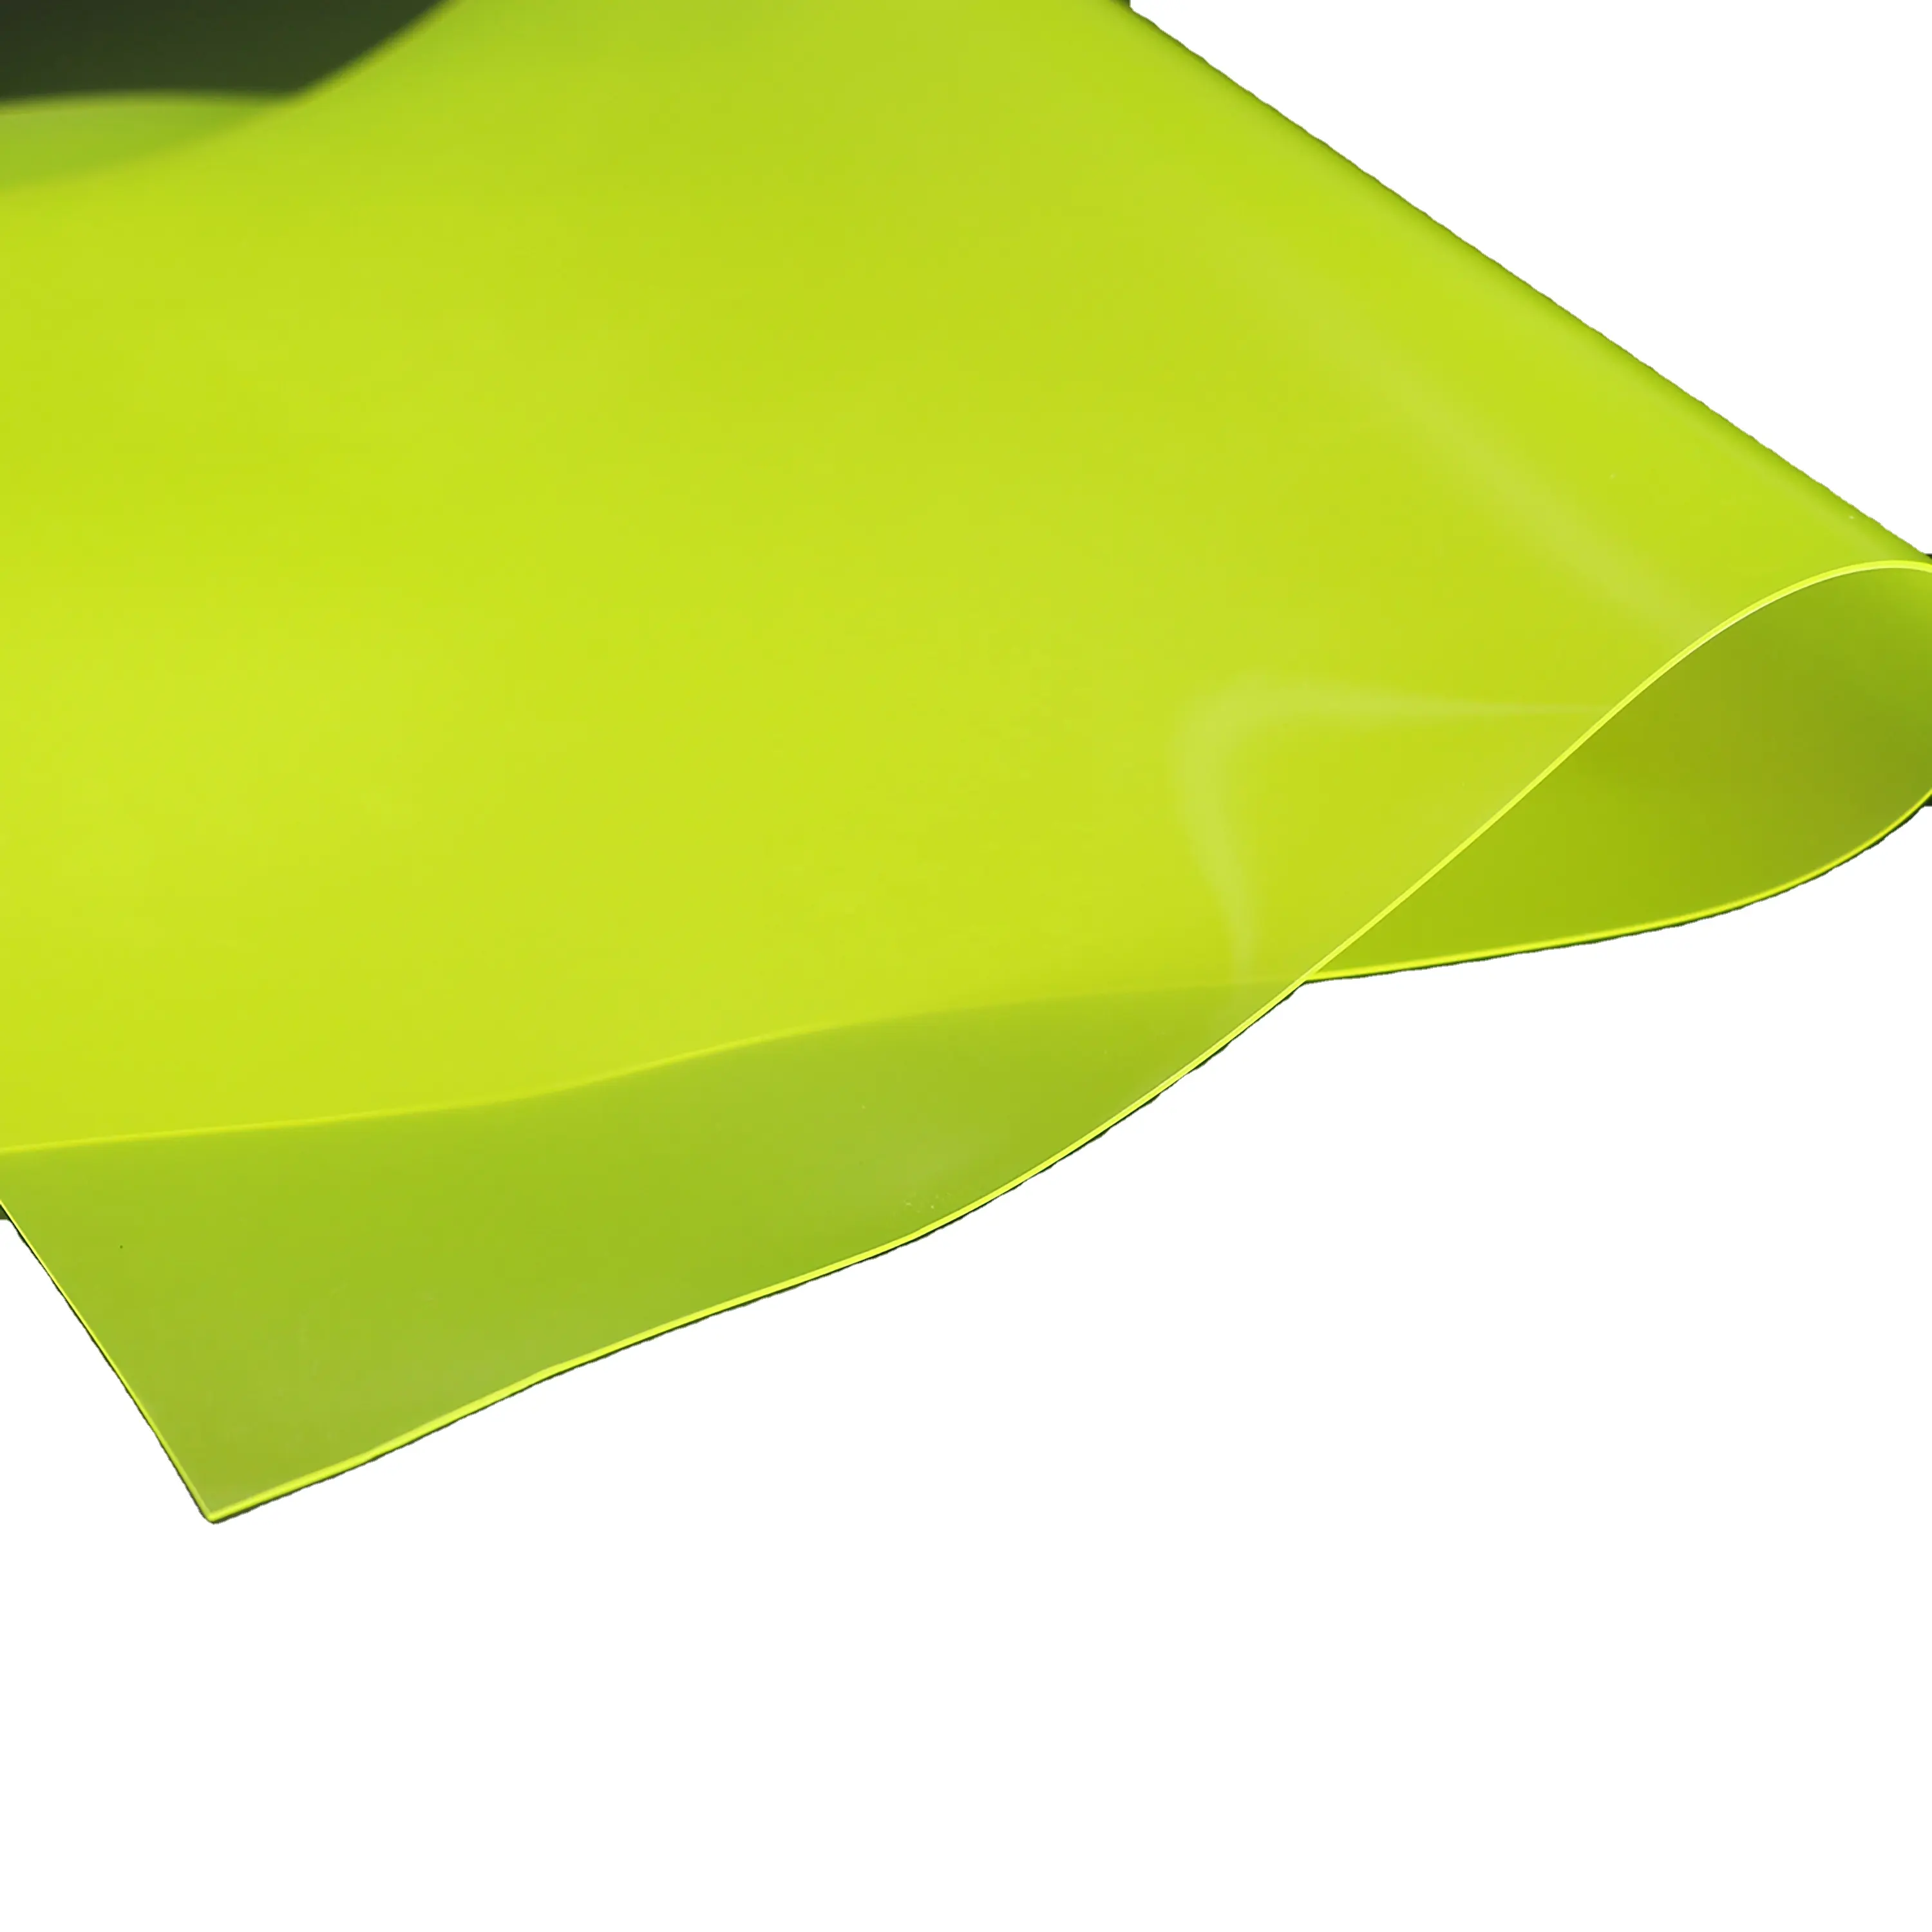 Xionglin-Película de TPU alifática elástica, no amarillento, lámina de poliuretano TPU transparente, película de poliéster mylar